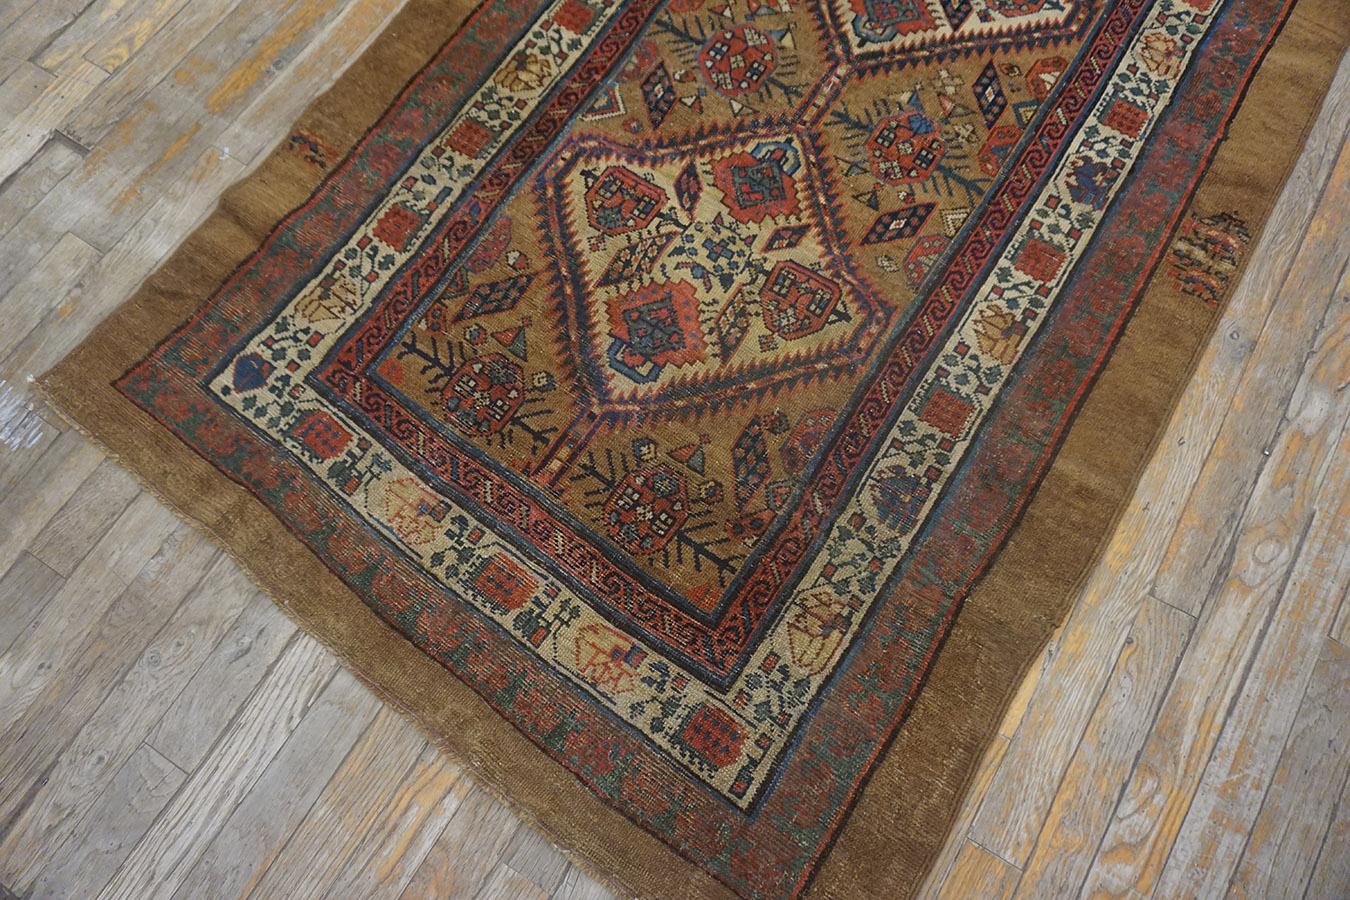 Late 19th Century 19th Century Persian Serab Carpet For Sale